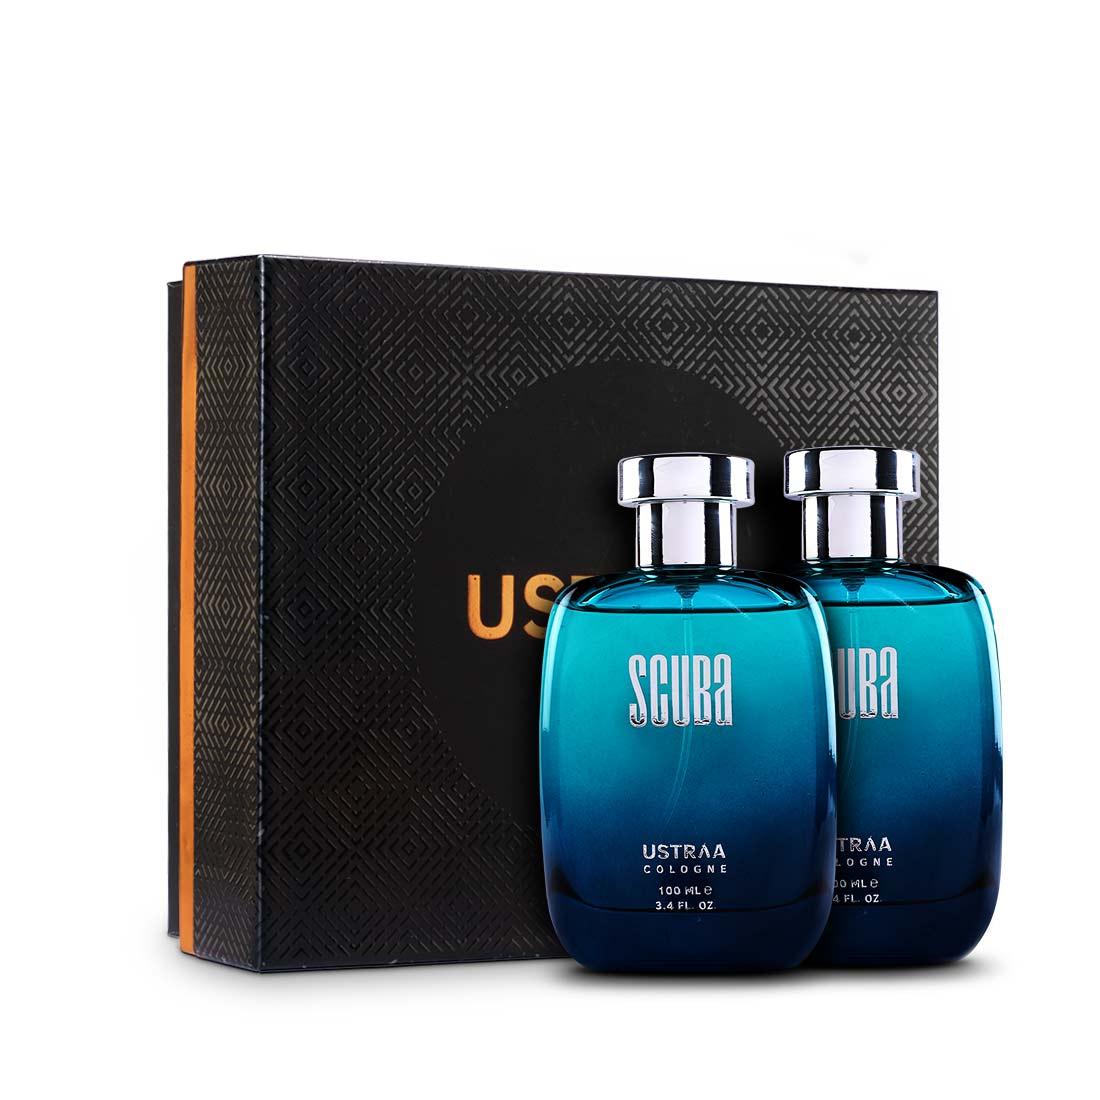 Fragrance Gift Box - Scuba Cologne 100ml - Set of 2